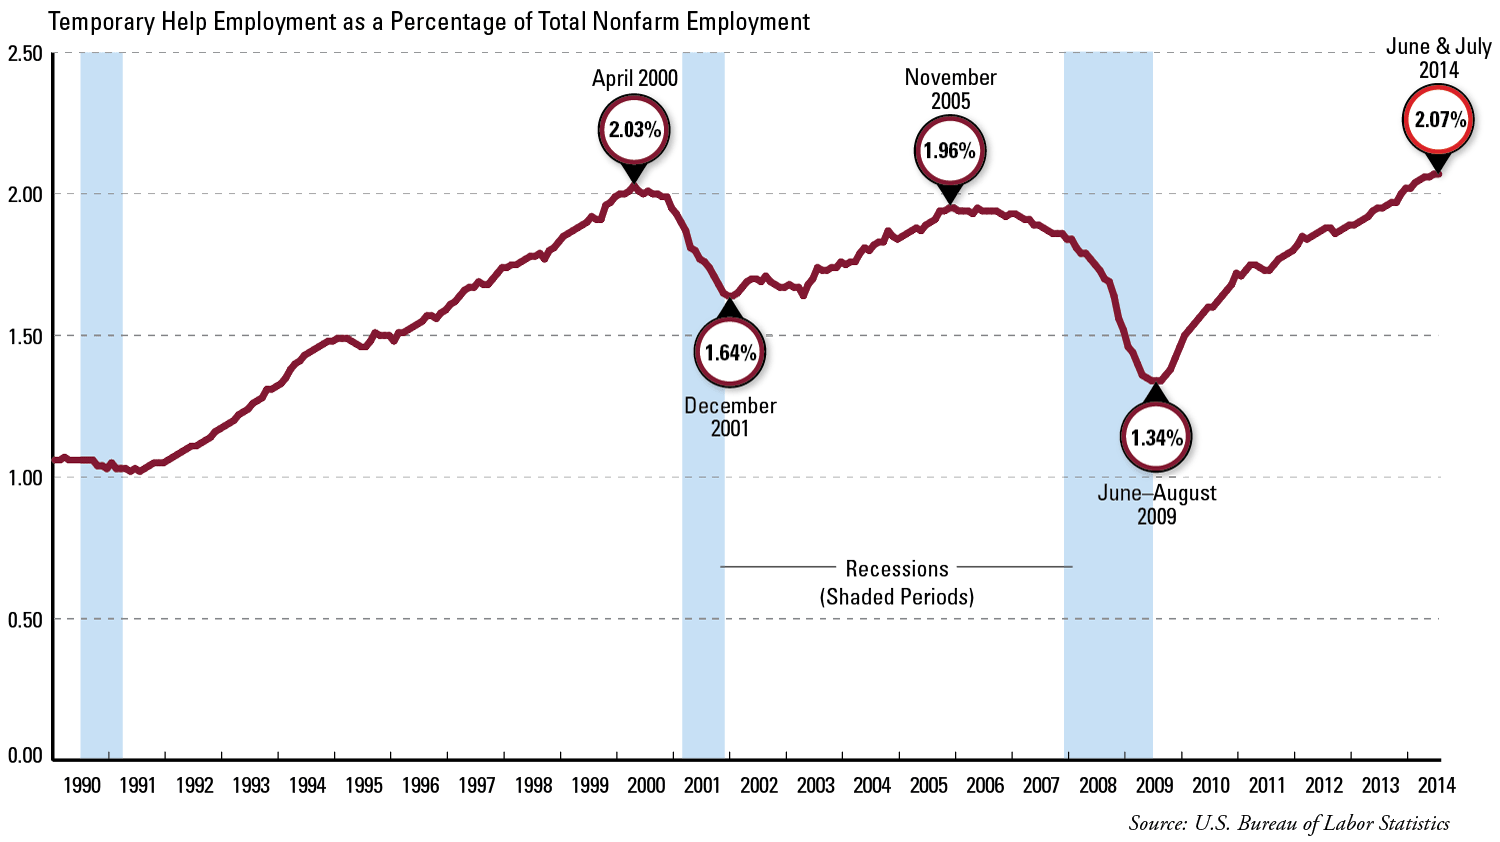 Temporary Help Employment as a Percentage of Total Nonfarm Employment